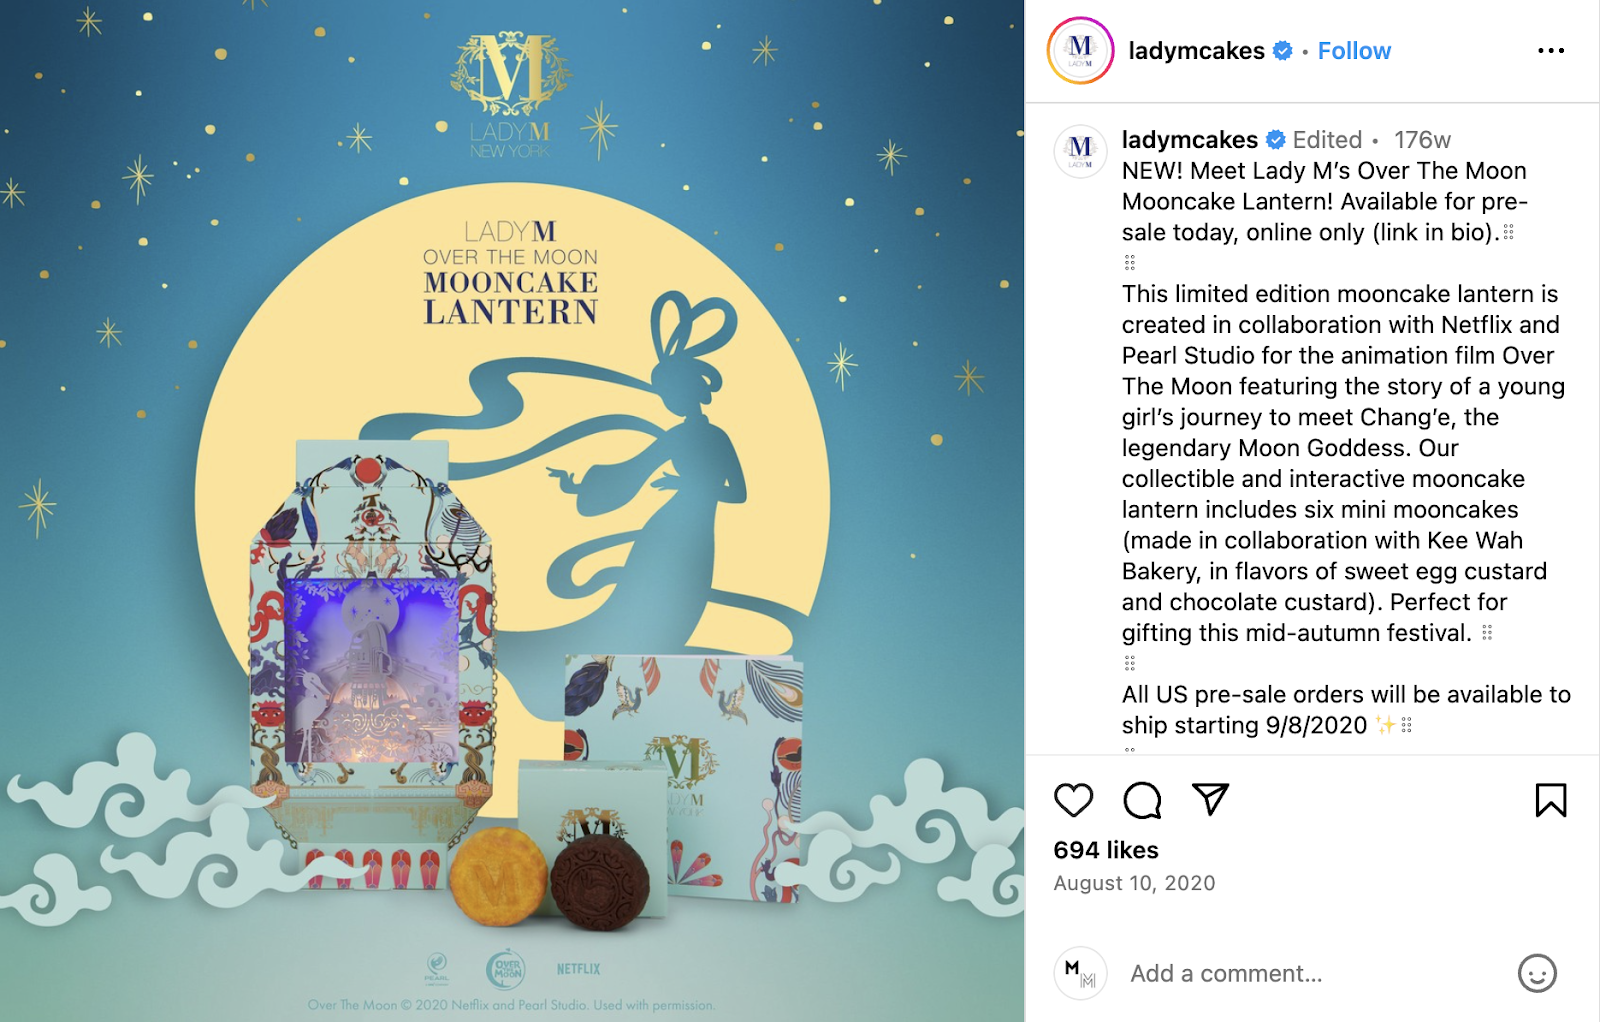 Restaurant marketing ideas: Dessert brand Lady M created a limited edition mooncake lantern in partnership with Netflix. 